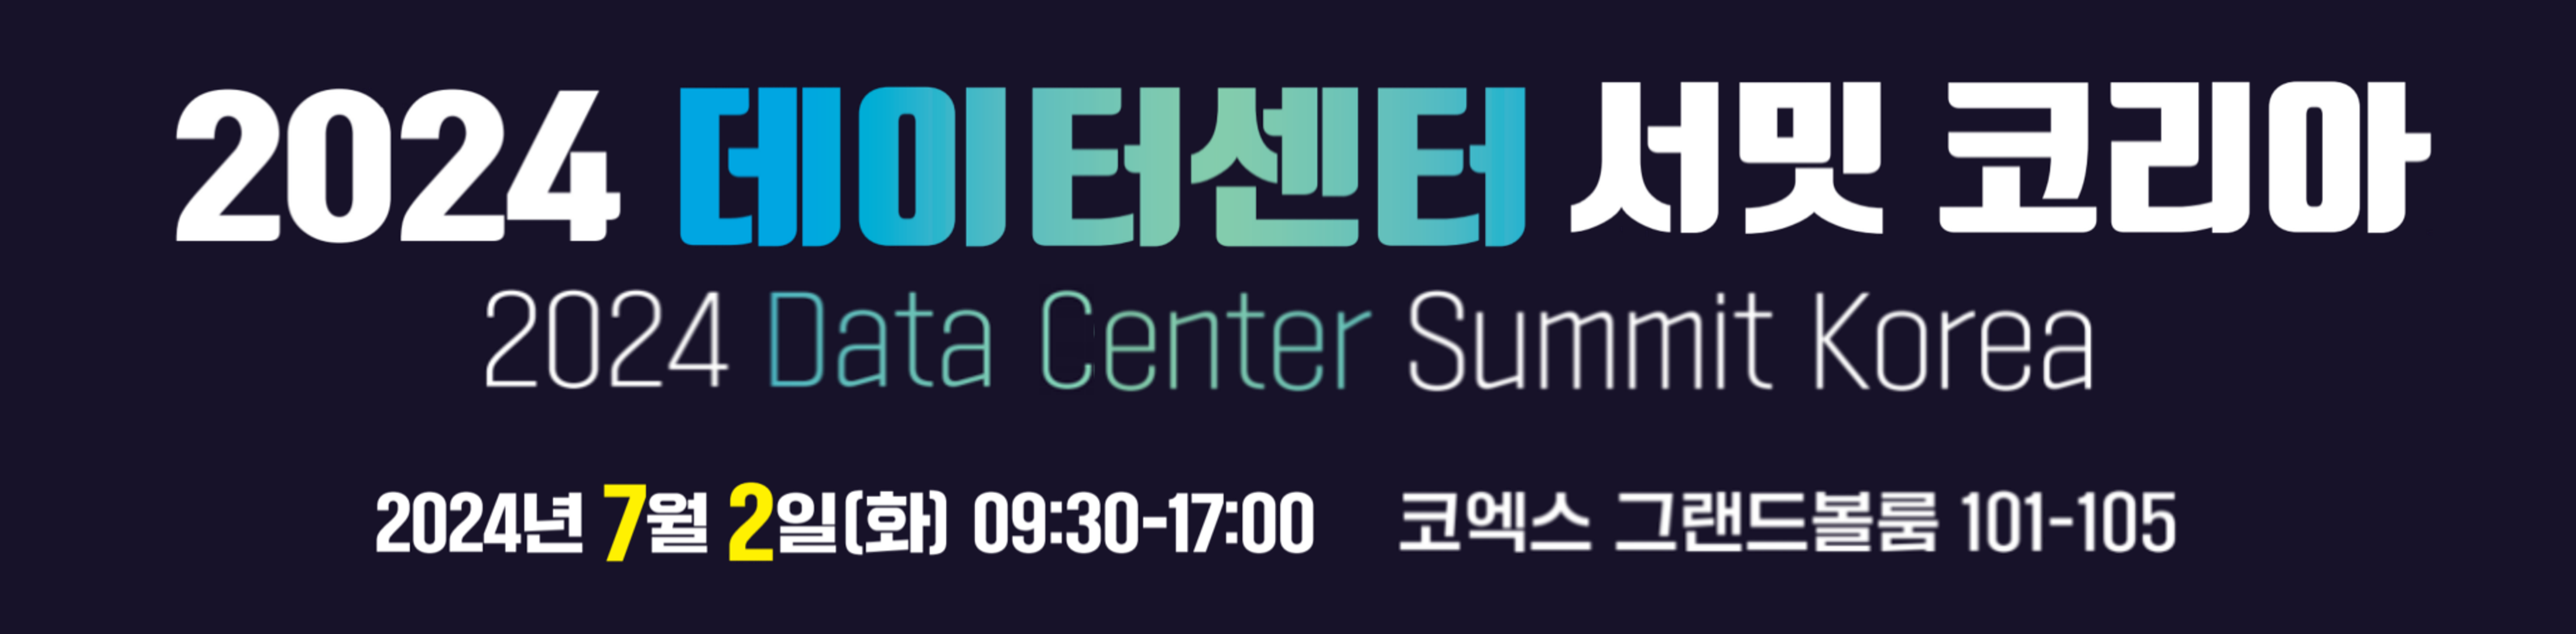 2024 Data Center Summit Korea – COEX Convention & Exhibition Center – Seoul – July 2, 2024